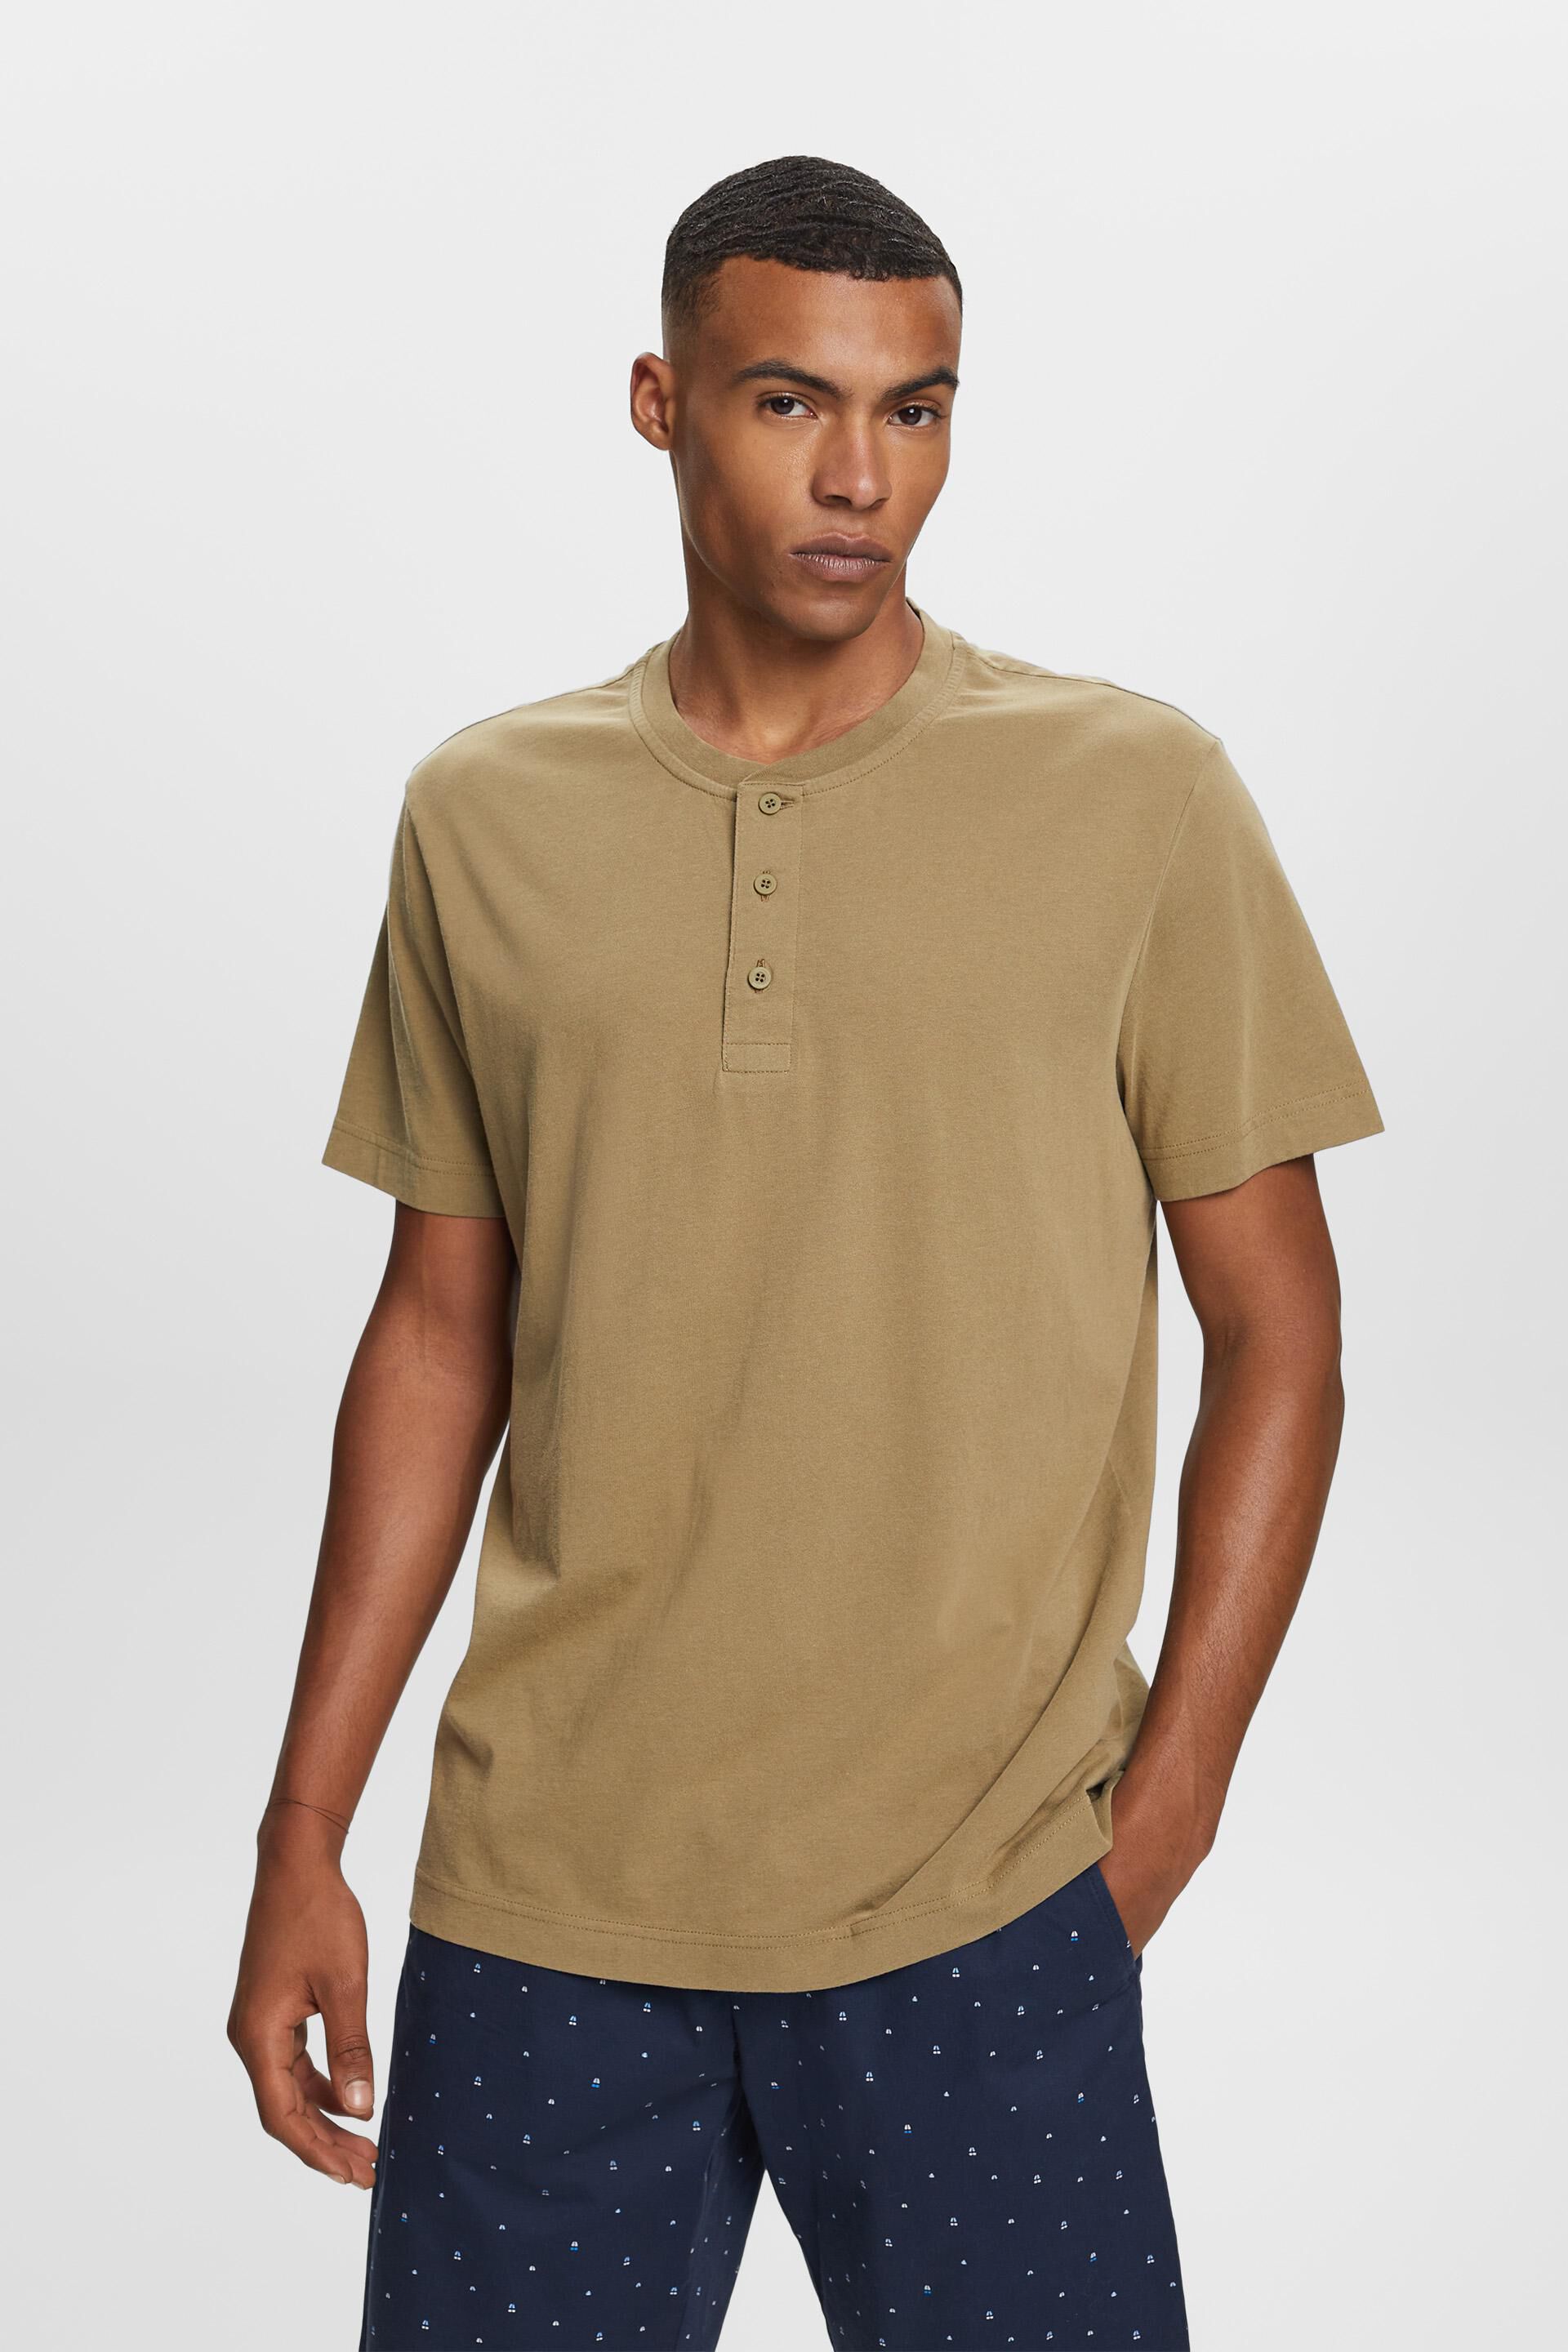 Esprit cotton Henley t-shirt, 100%